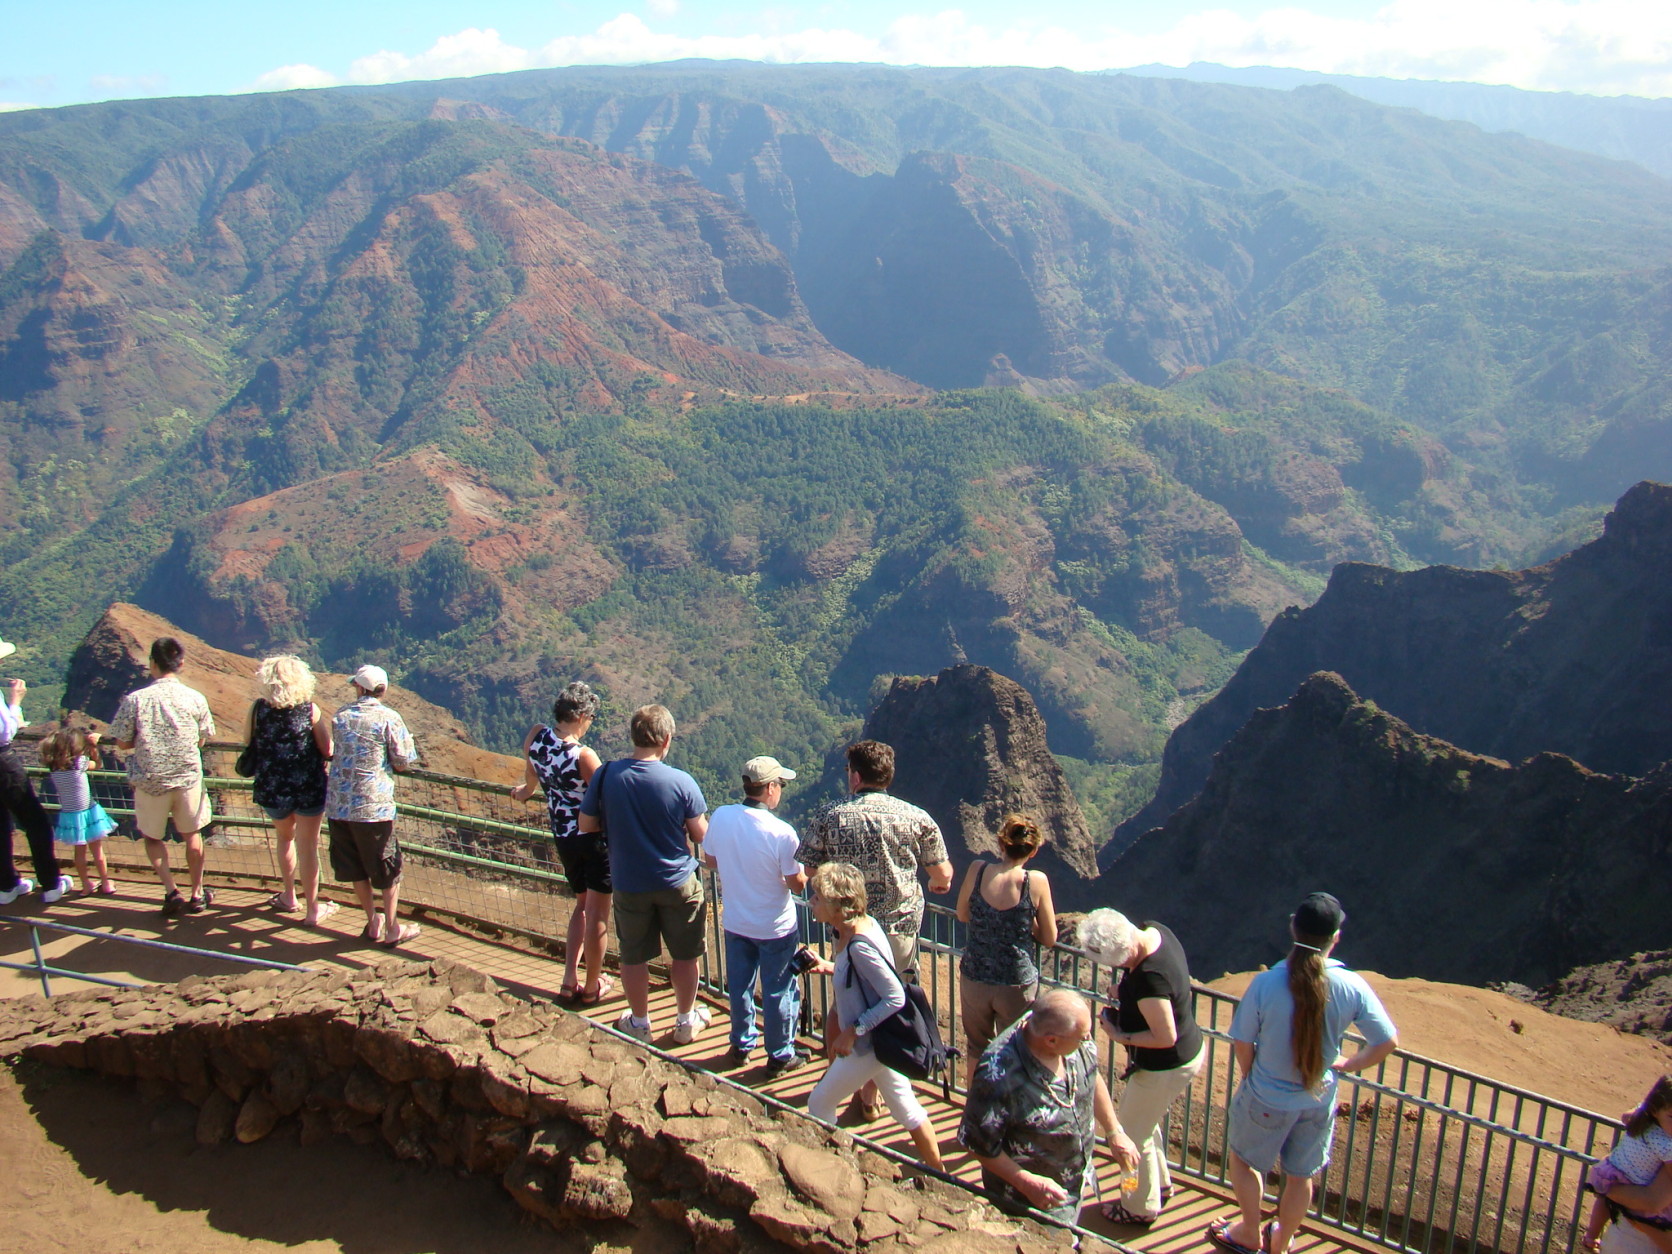 This Jan. 5, 2012 photo shows tourists lining up to view Waimea Canyon on the island of Kauai, Hawaii. The natural wonder has been dubbed the Grand Canyon of the Pacific. (AP Photo/Joe Kafka)